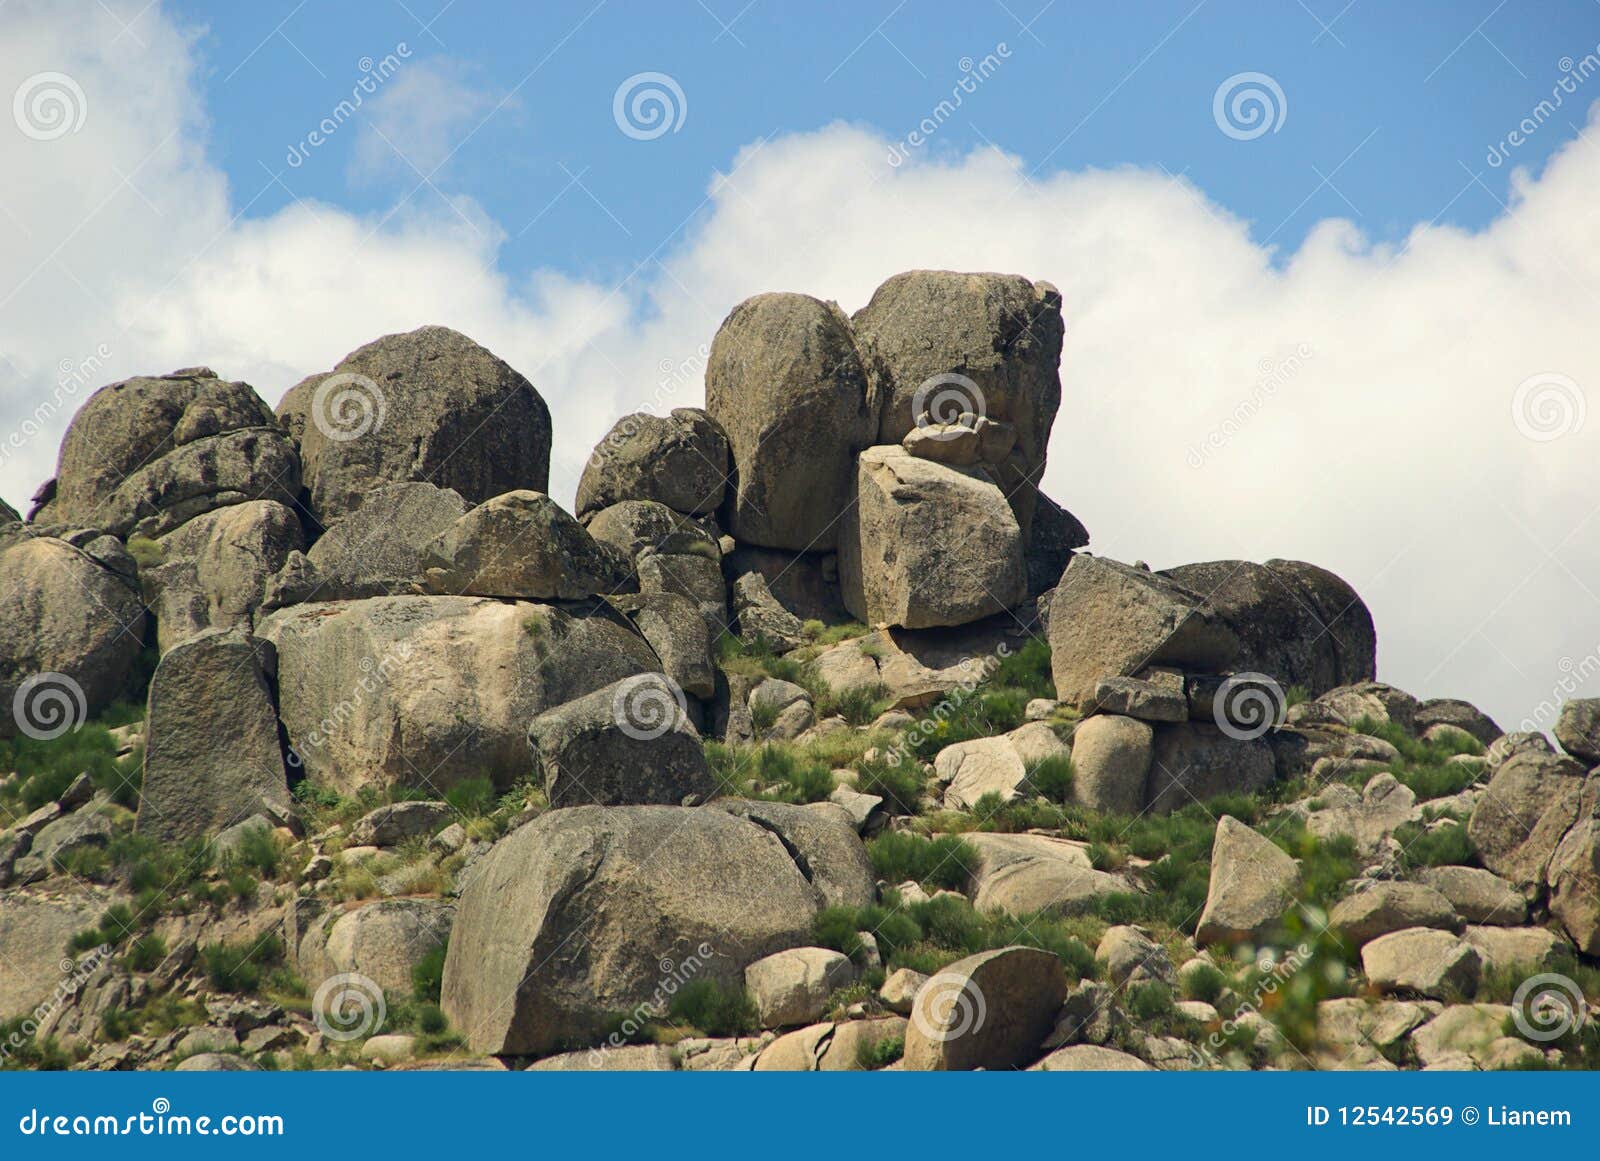 valencia de alcantara granite rock landscape